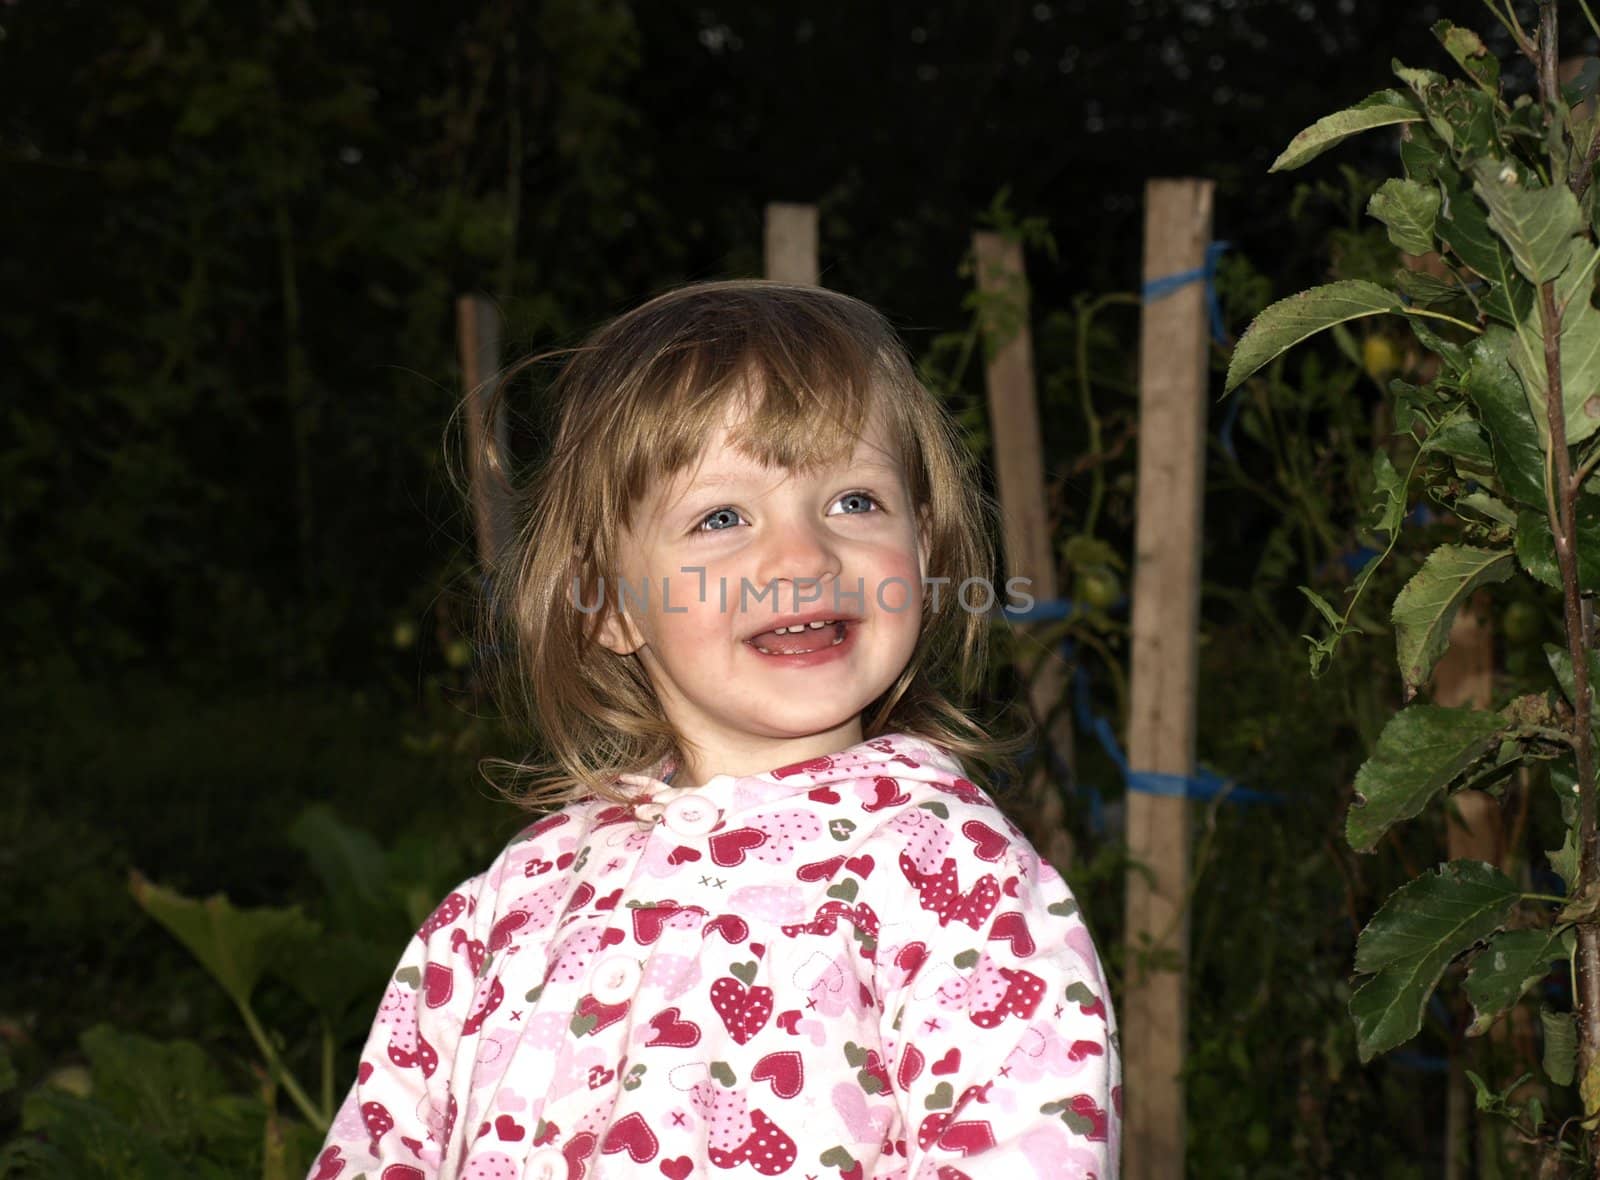 Cute smiling little girl on evening garden background